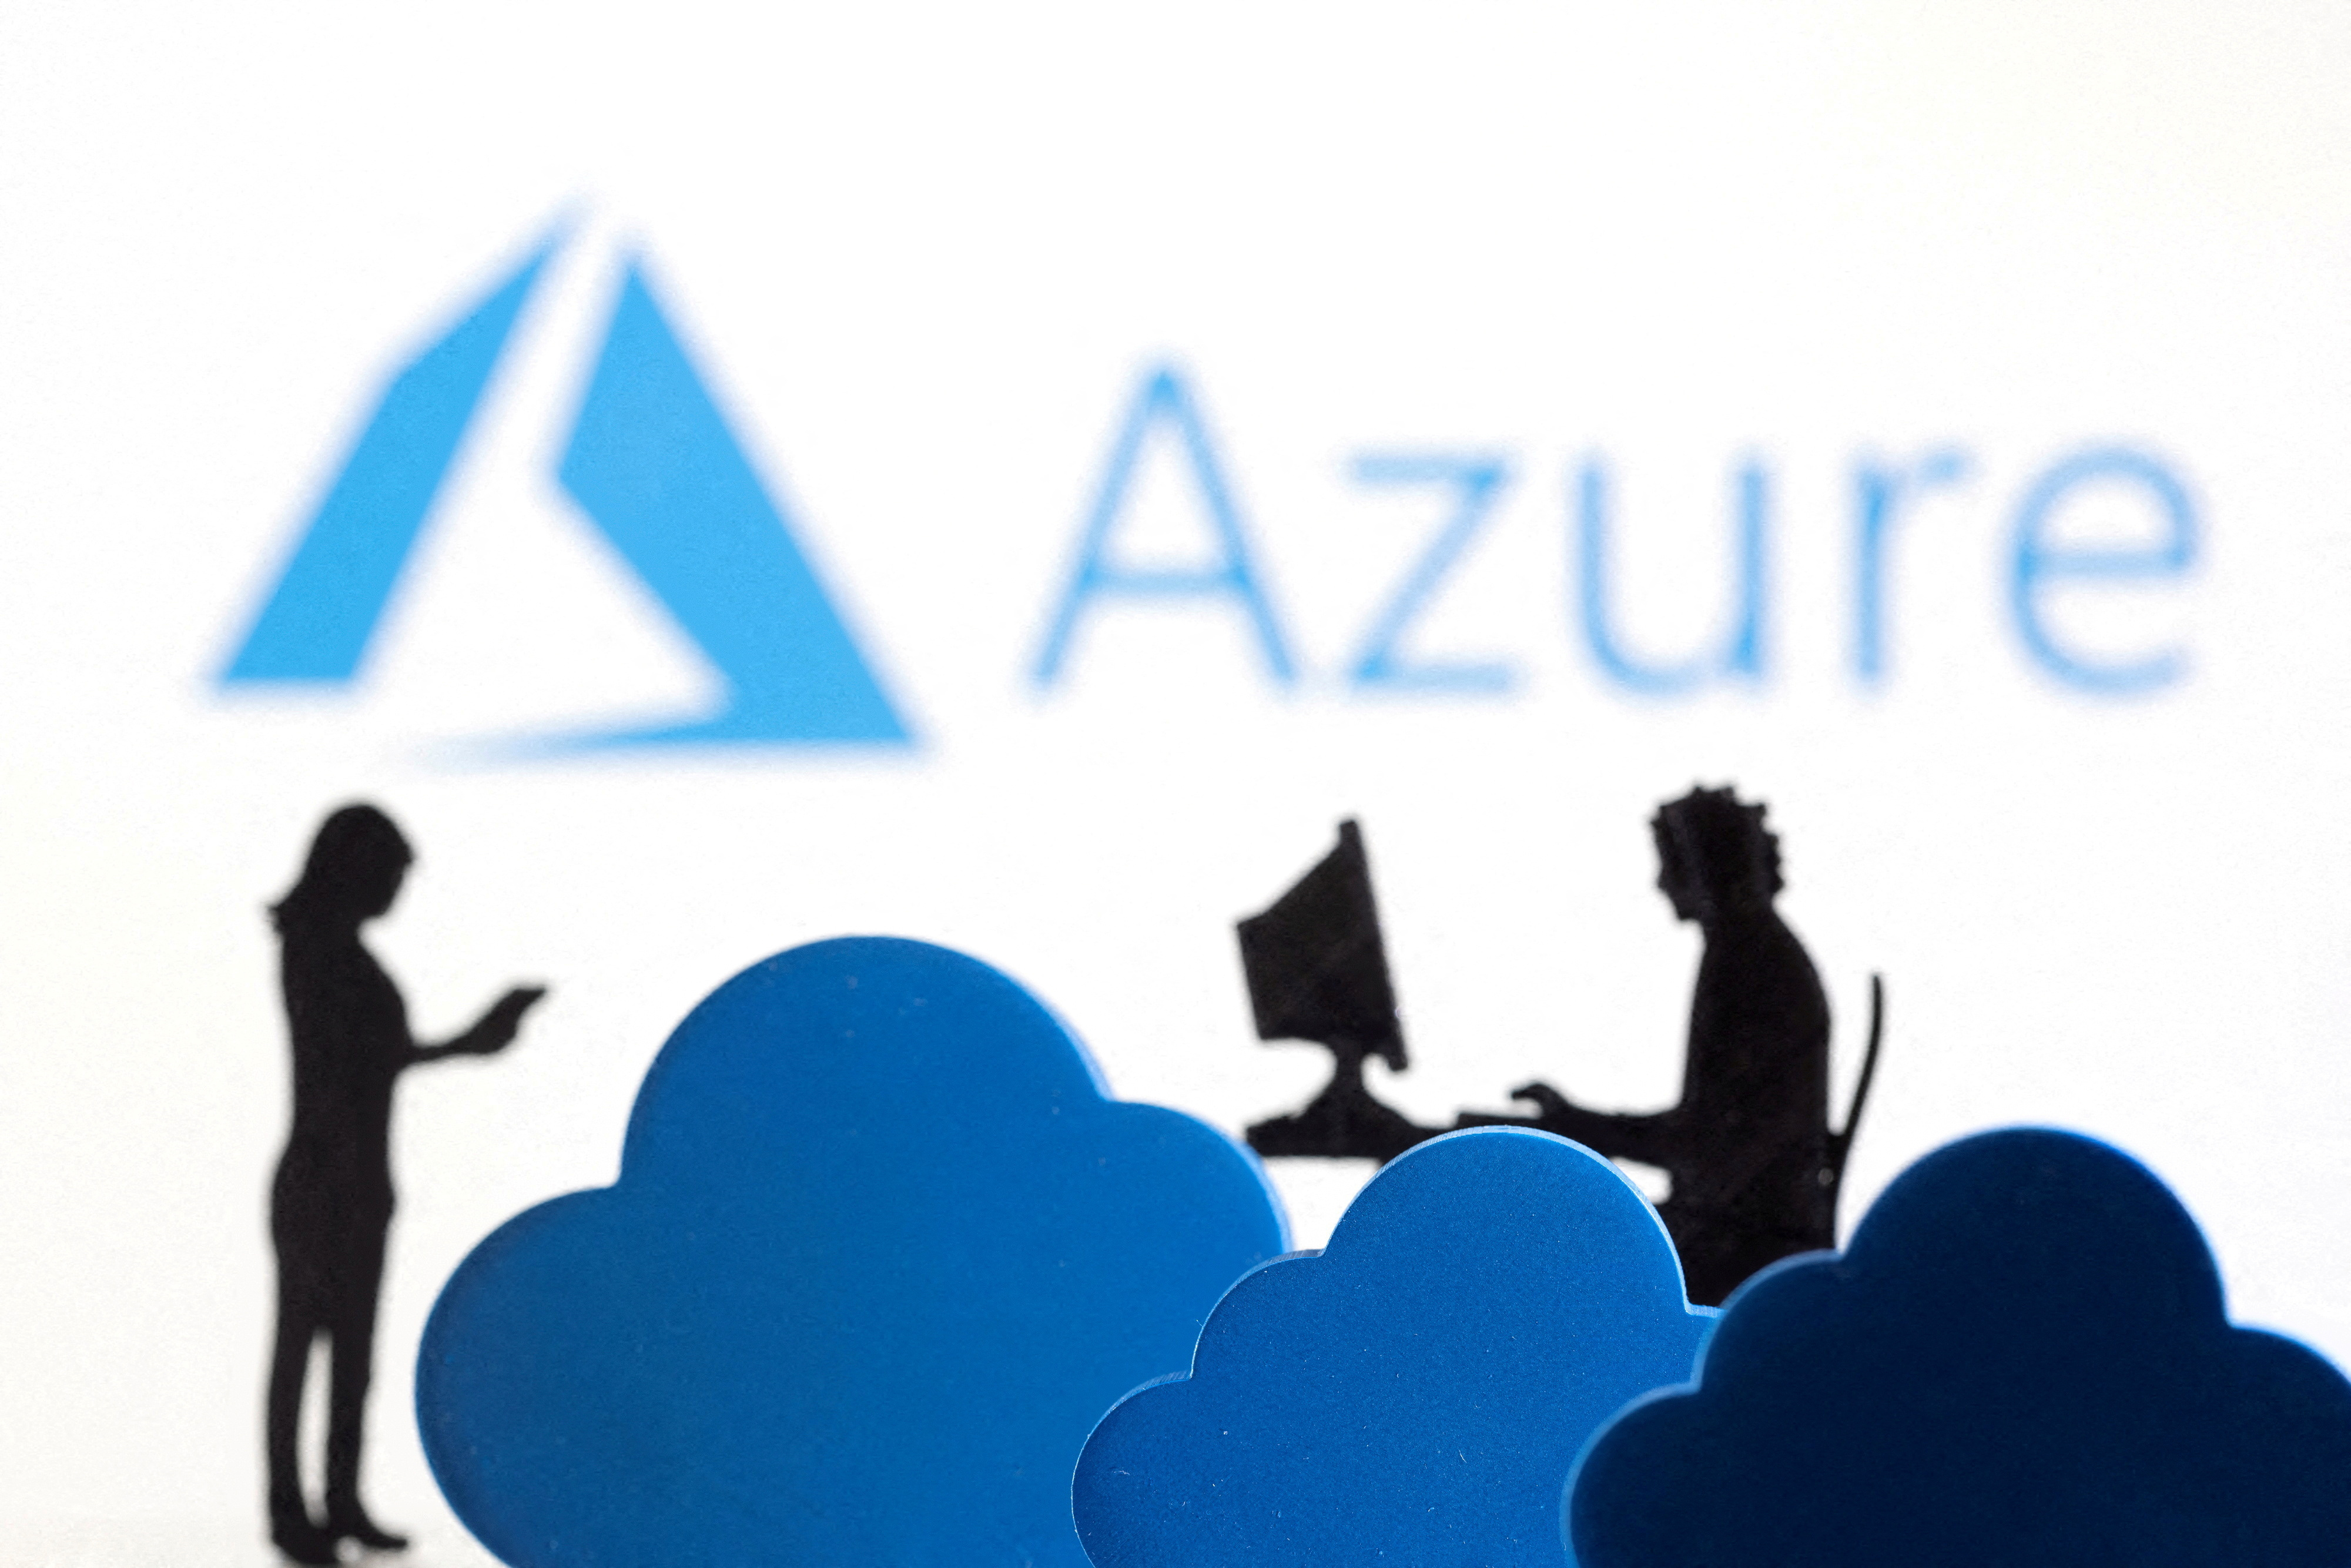 Illustration shows Microsoft Azure cloud service logo